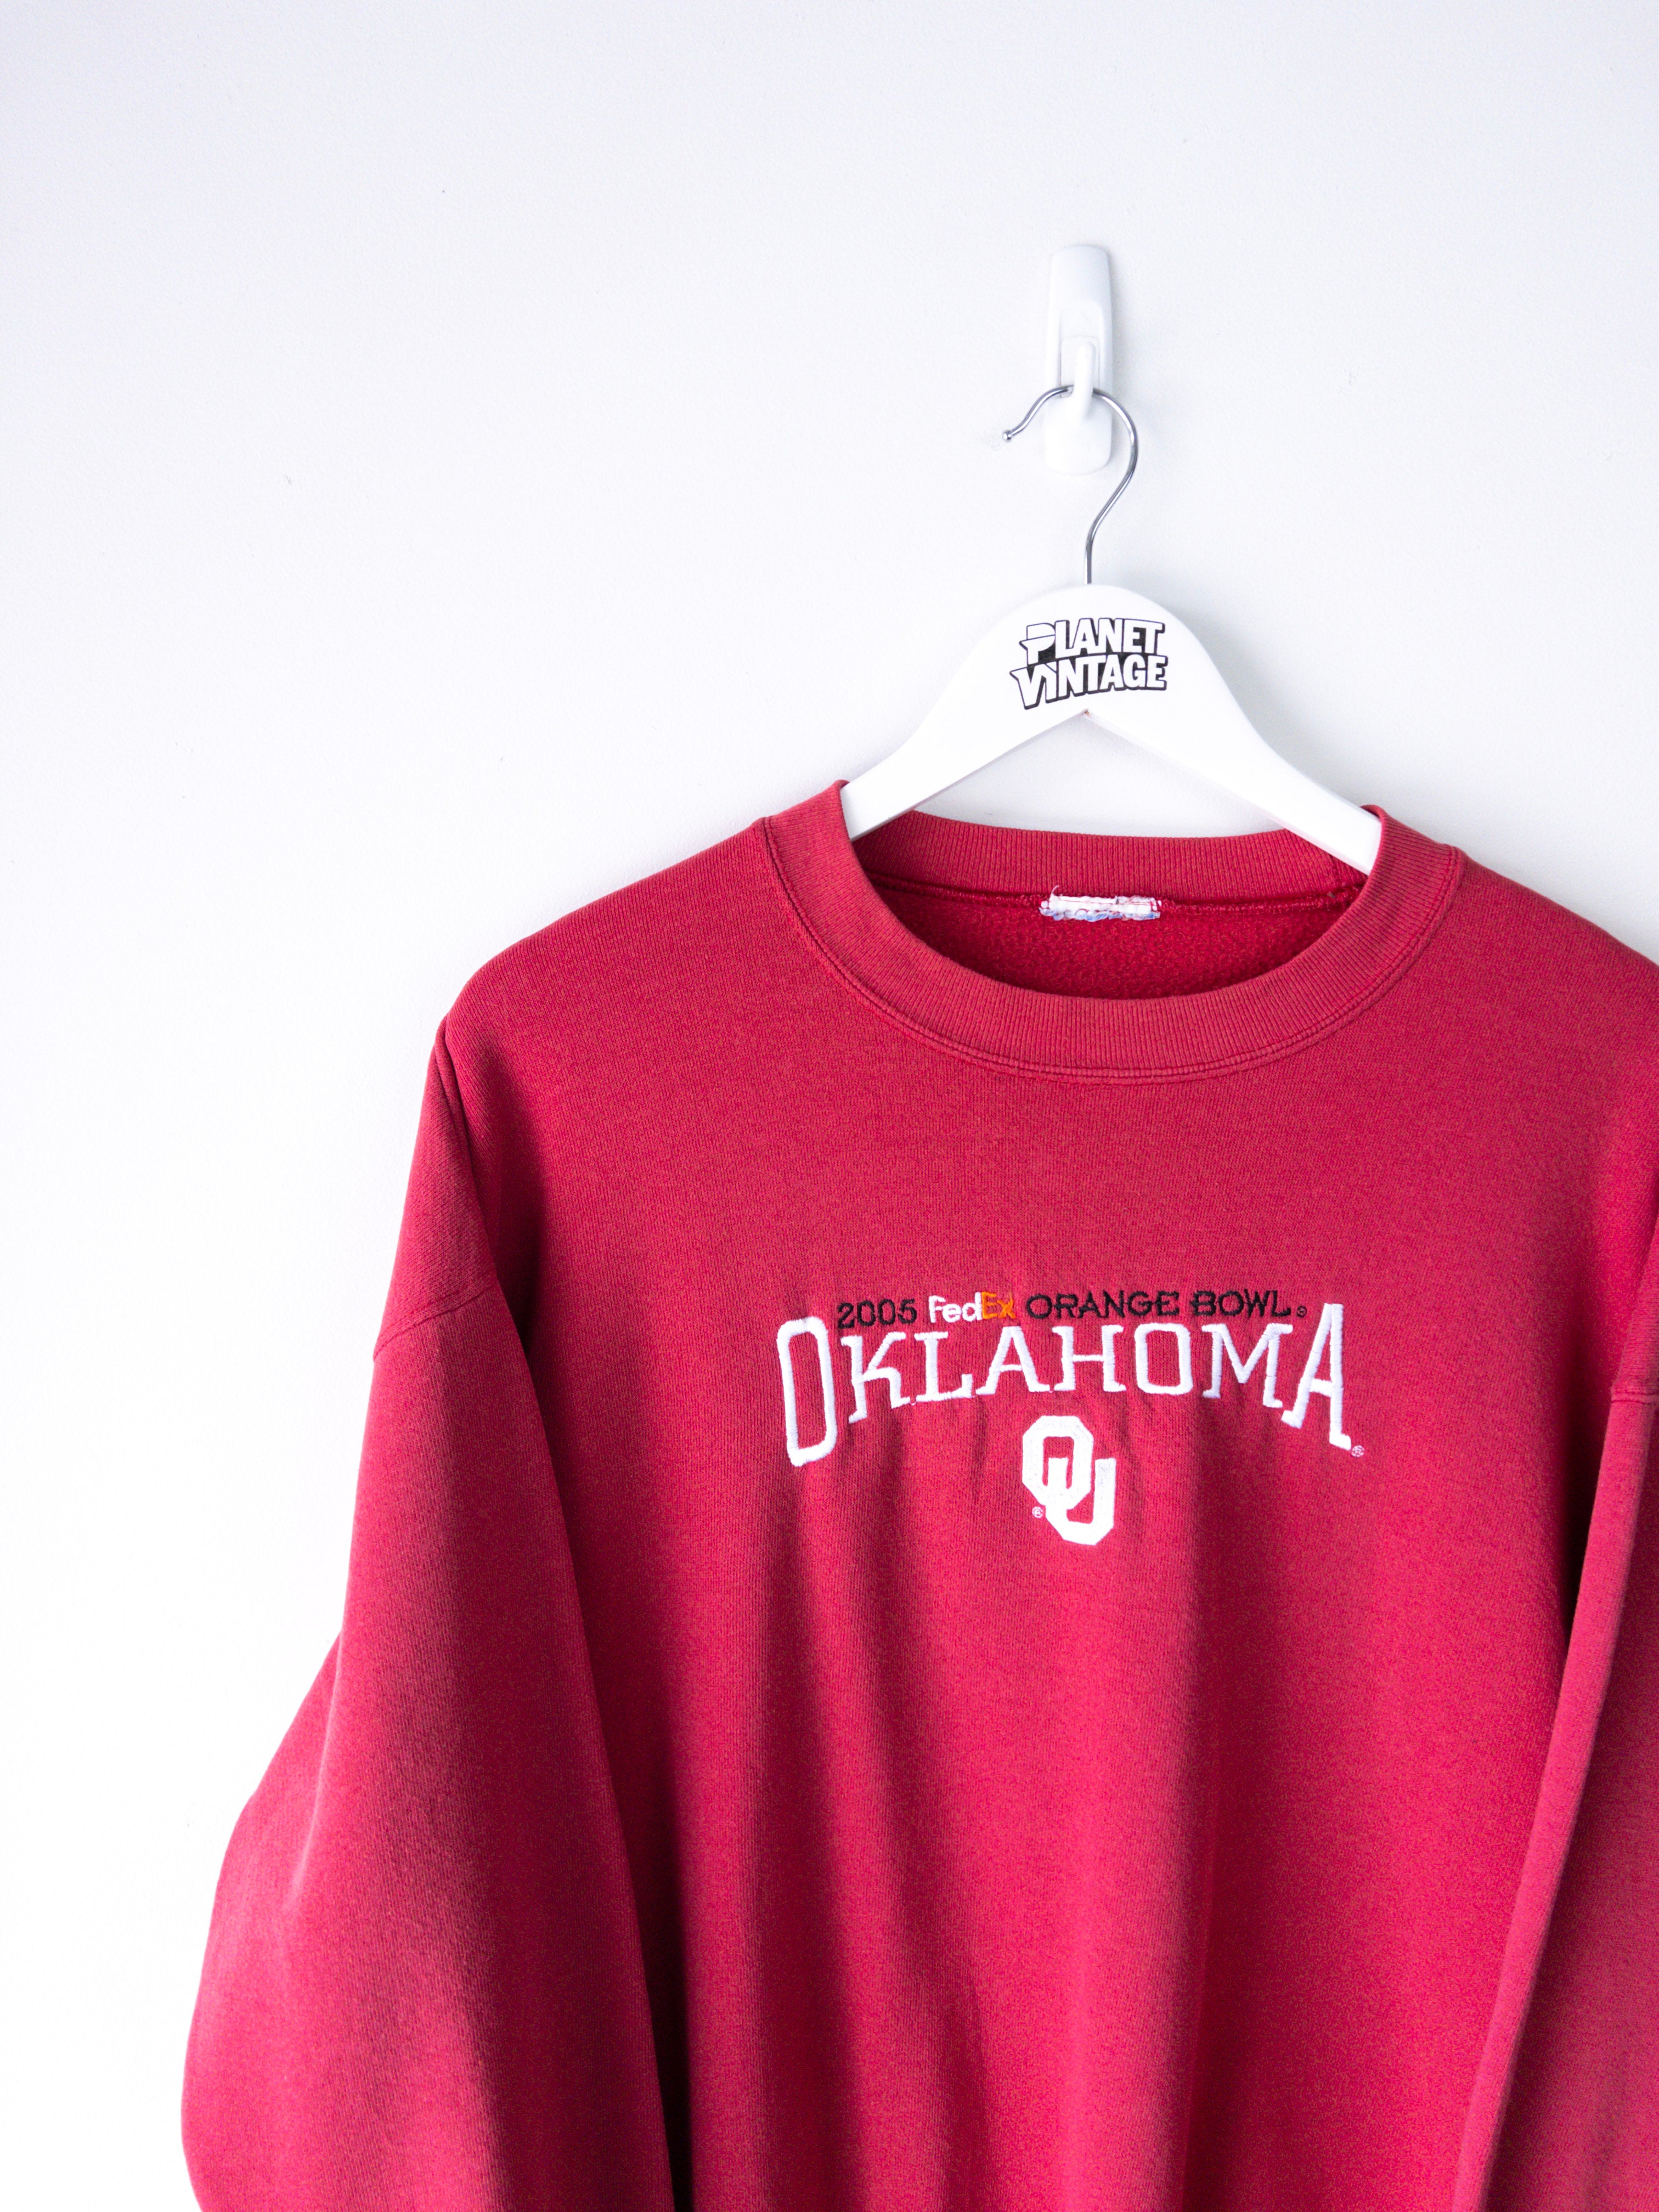 Vintage Oklahoma University Orange Bowl Sweatshirt (XL)